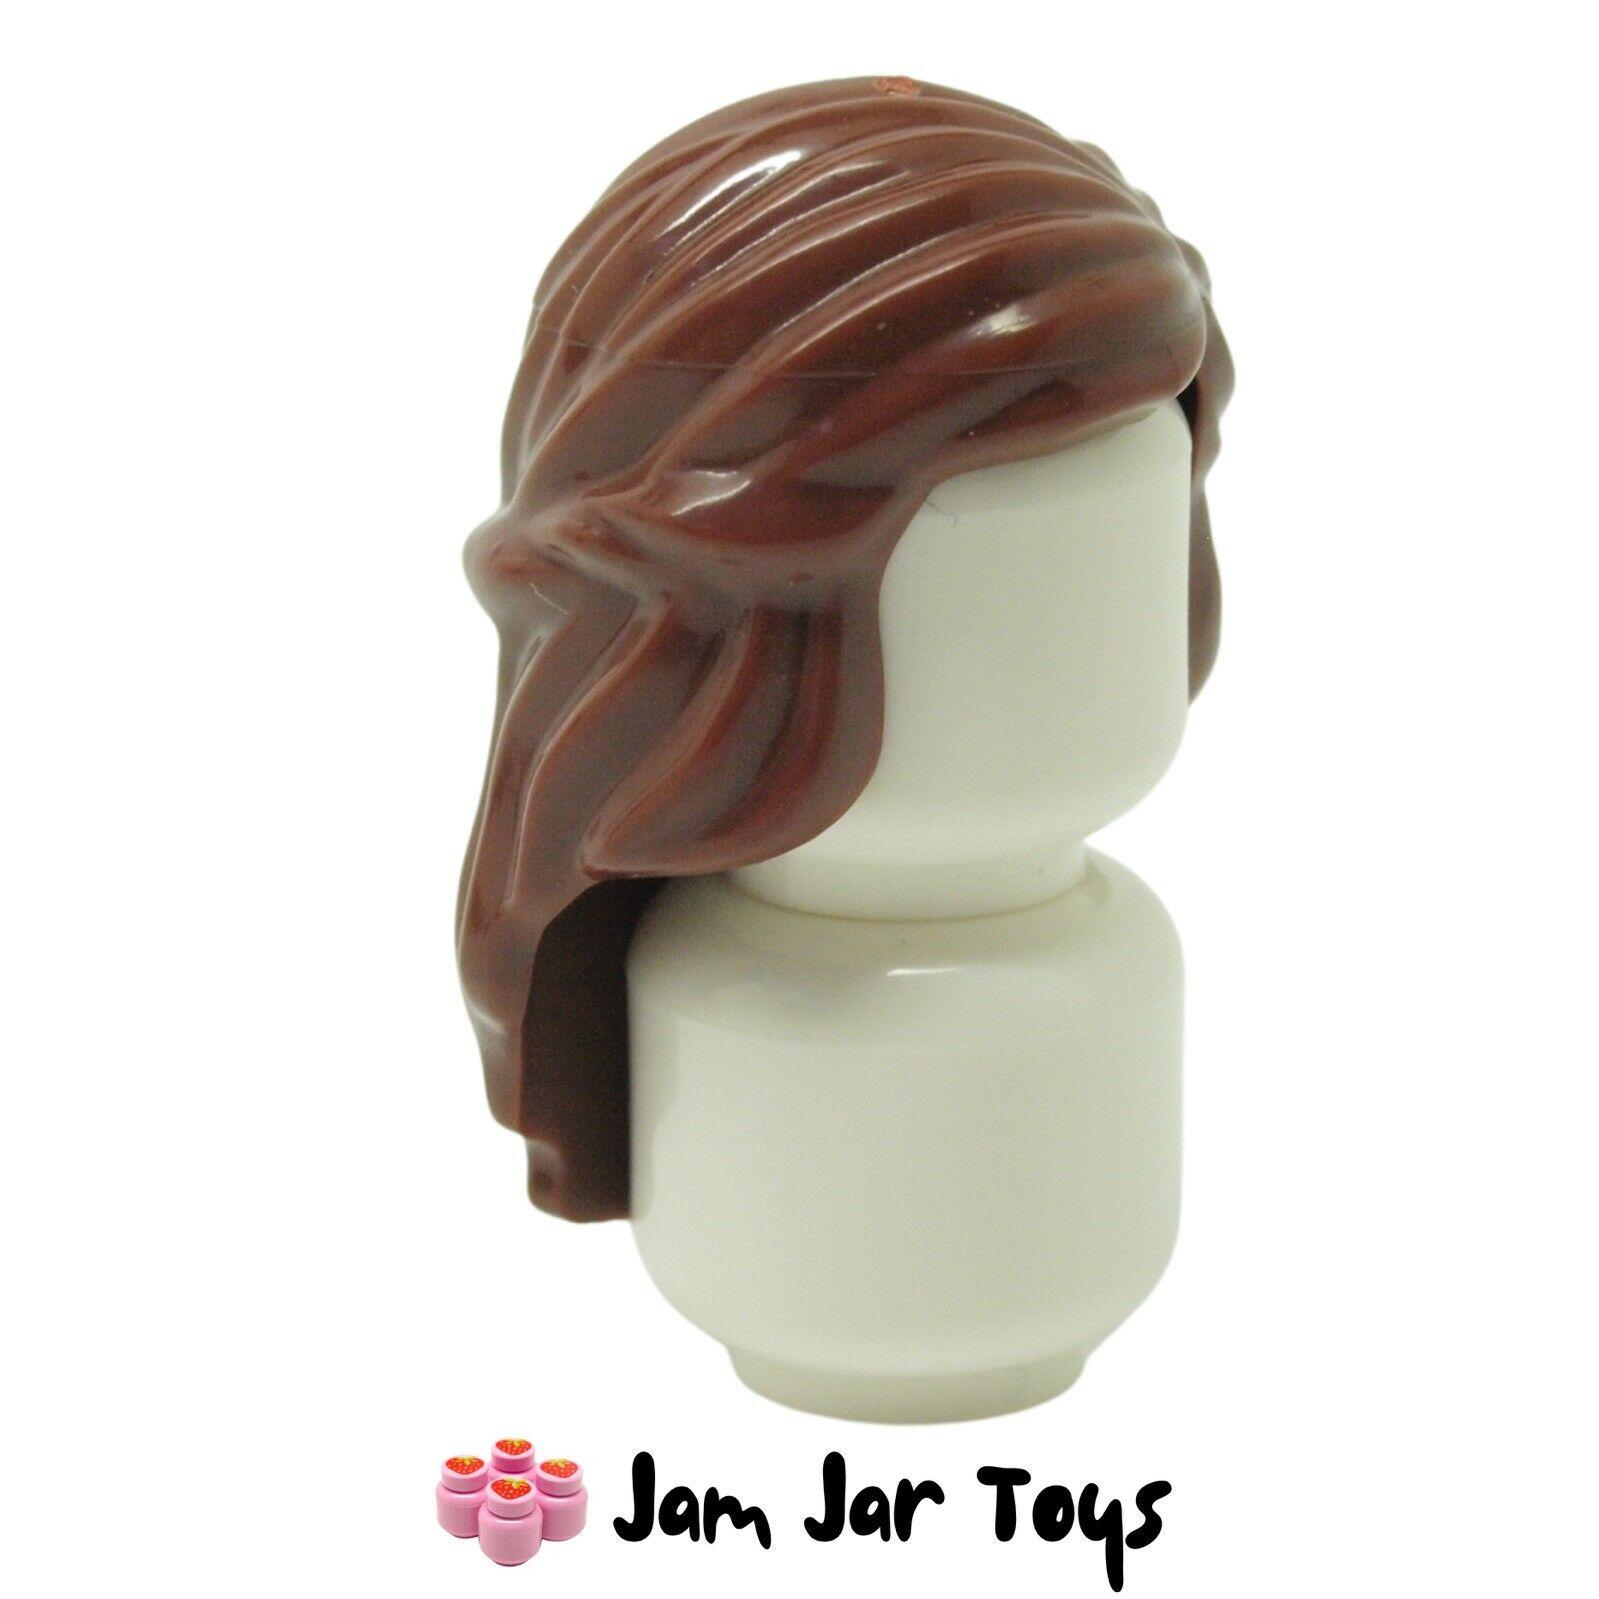 LEGO Reddish Brown Female Minifigure Hair with Braid in Back 